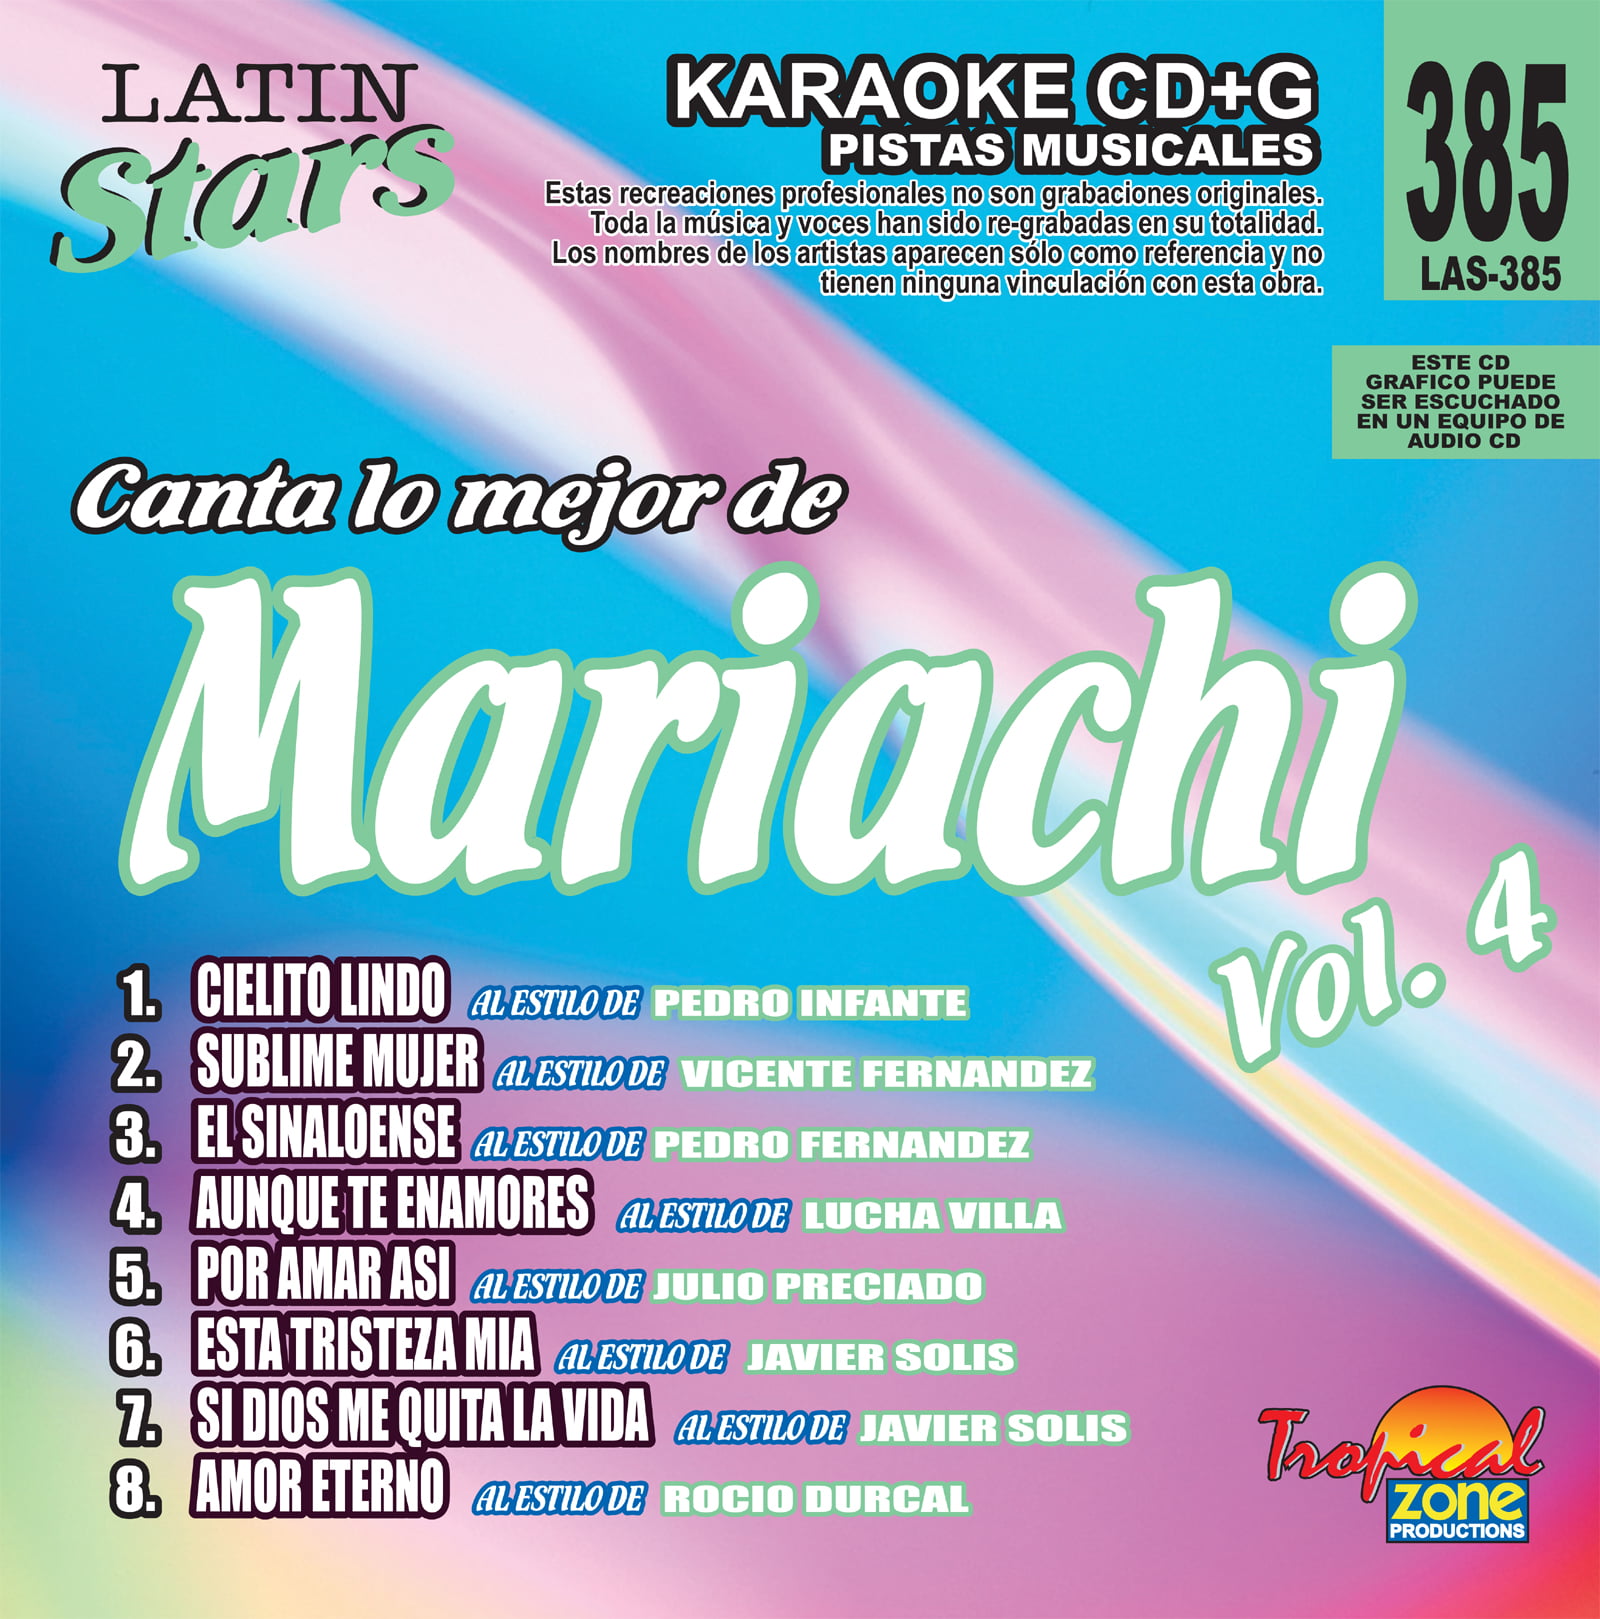 Karaoke Latin Stars 385 Mariachi Vol 4 Walmart Com Walmart Com Party tyme karaoke en espanol. walmart com